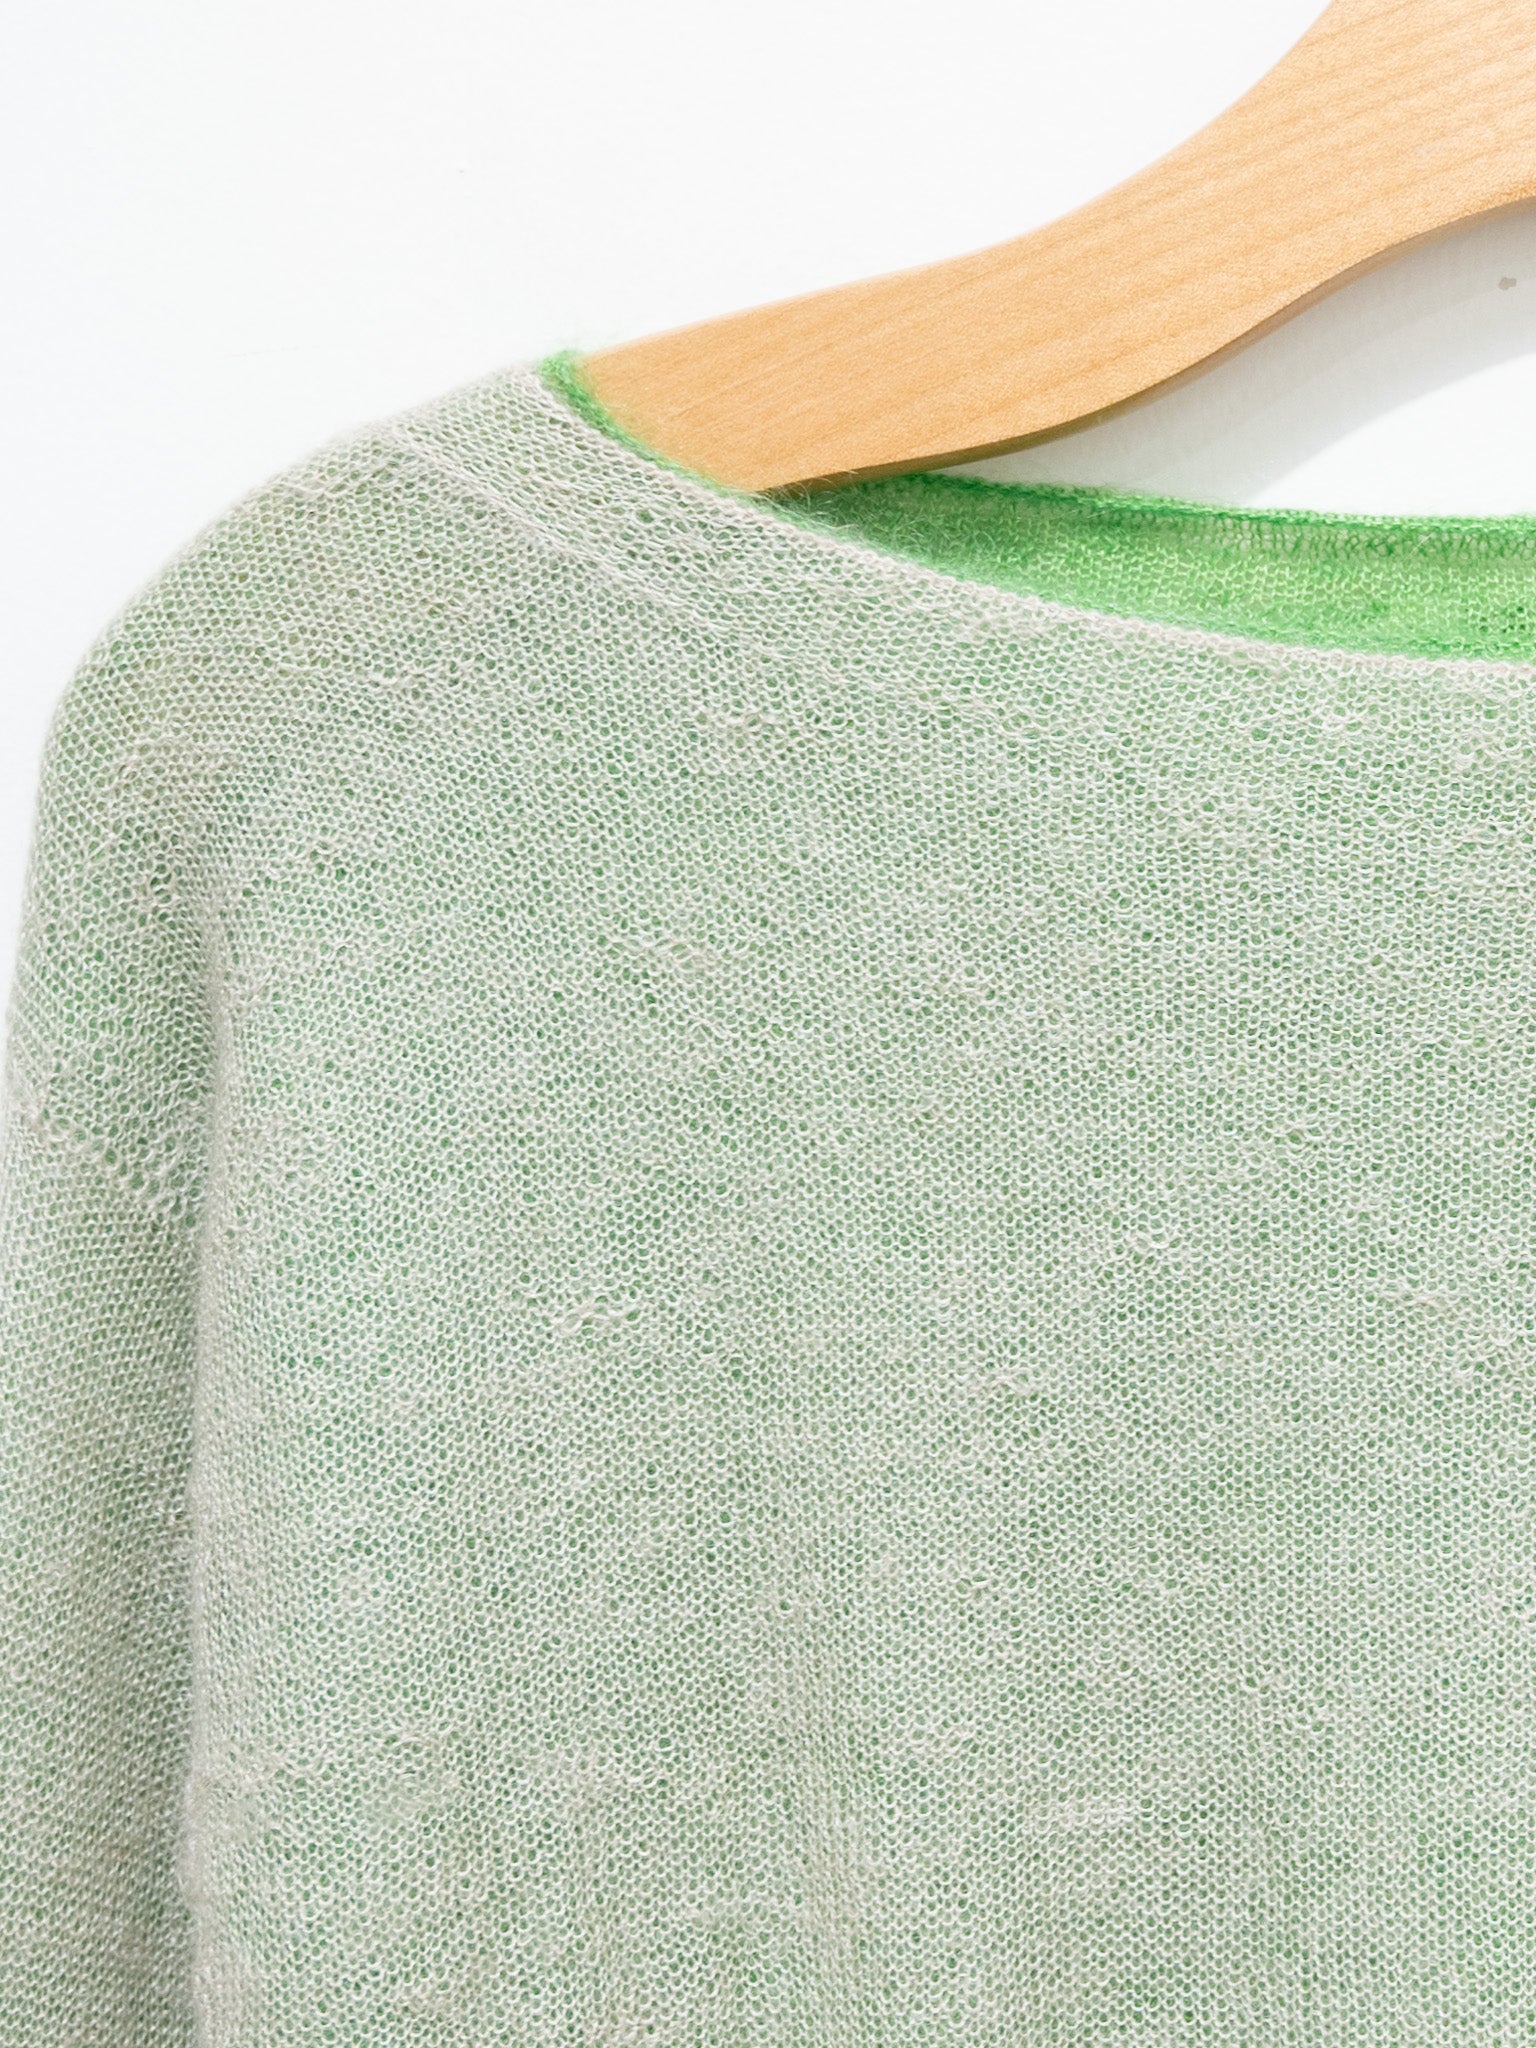 Namu Shop - Unfil Extrakid Mohair and Silk Layered Sweater - Greige x Green